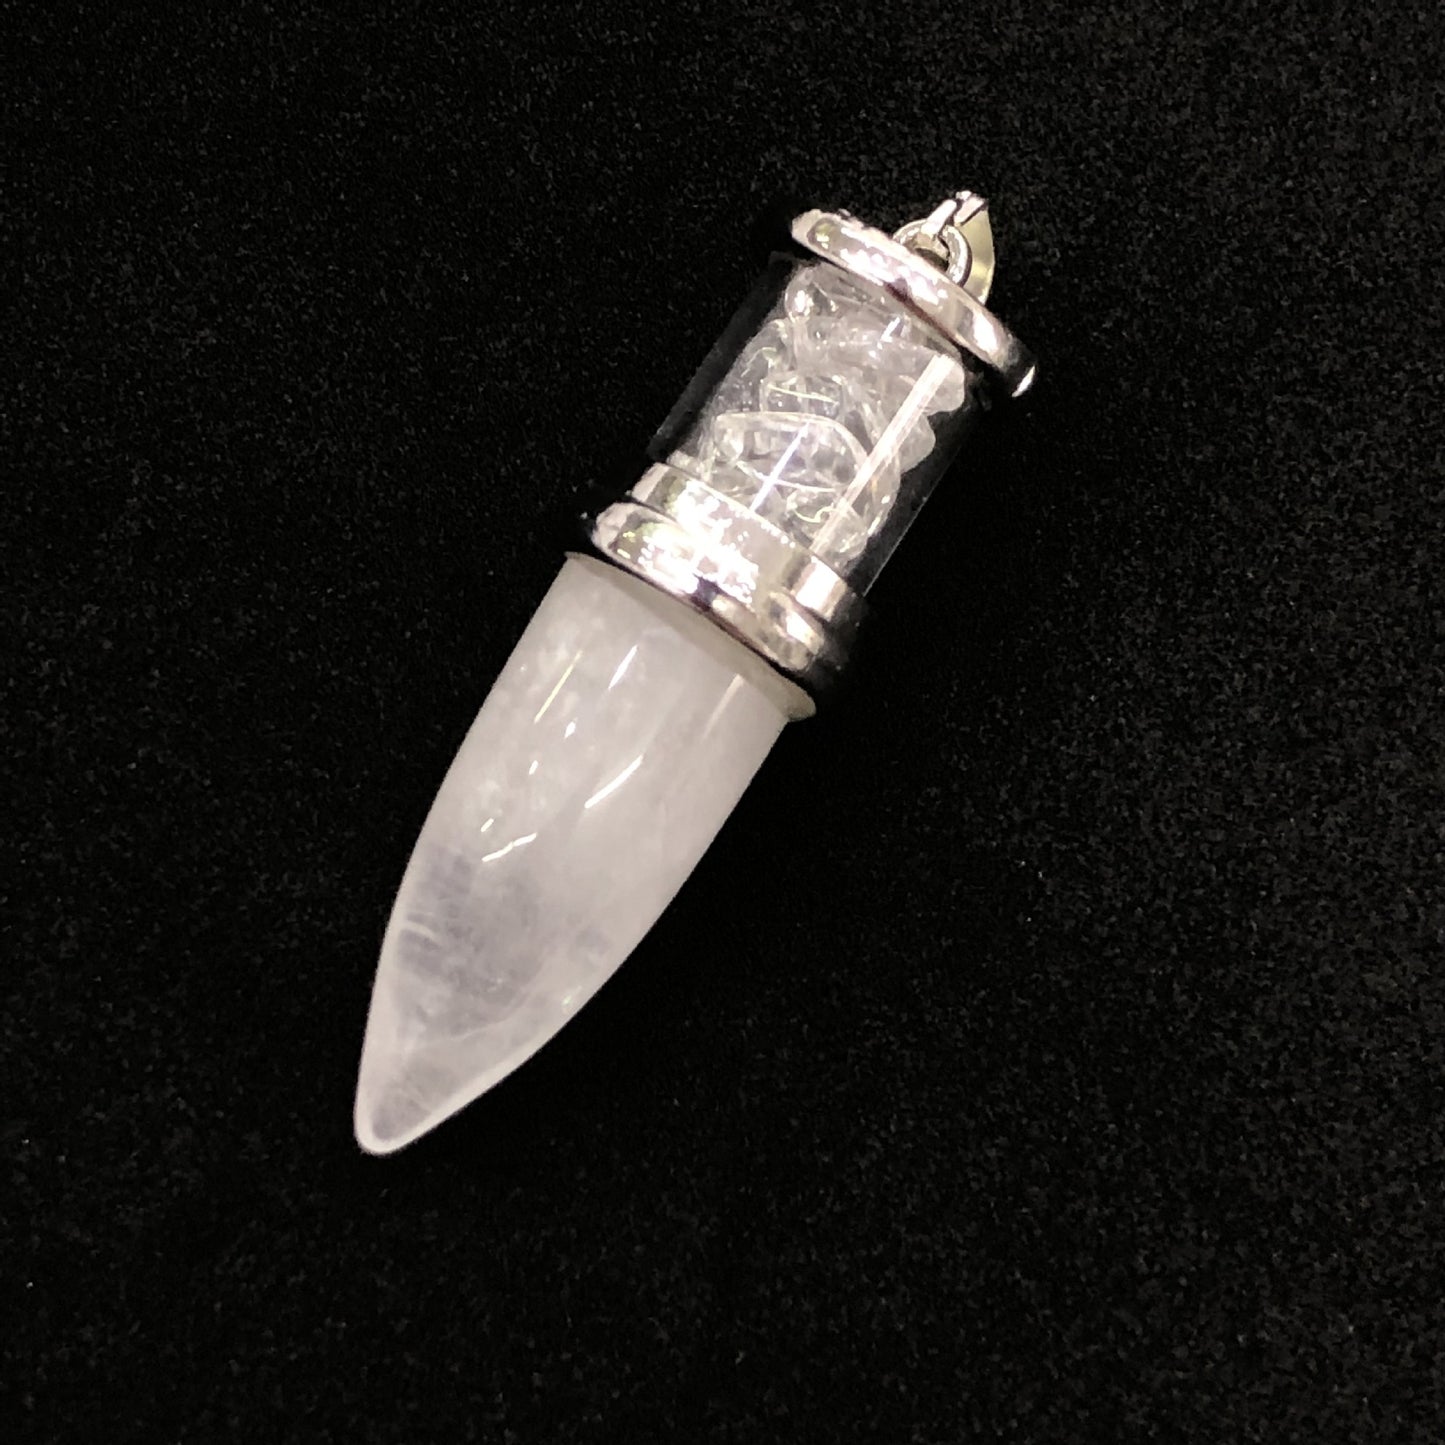 Clear Quartz Gemstone Bullet Pendant - 53x16mm - China - NEW1122